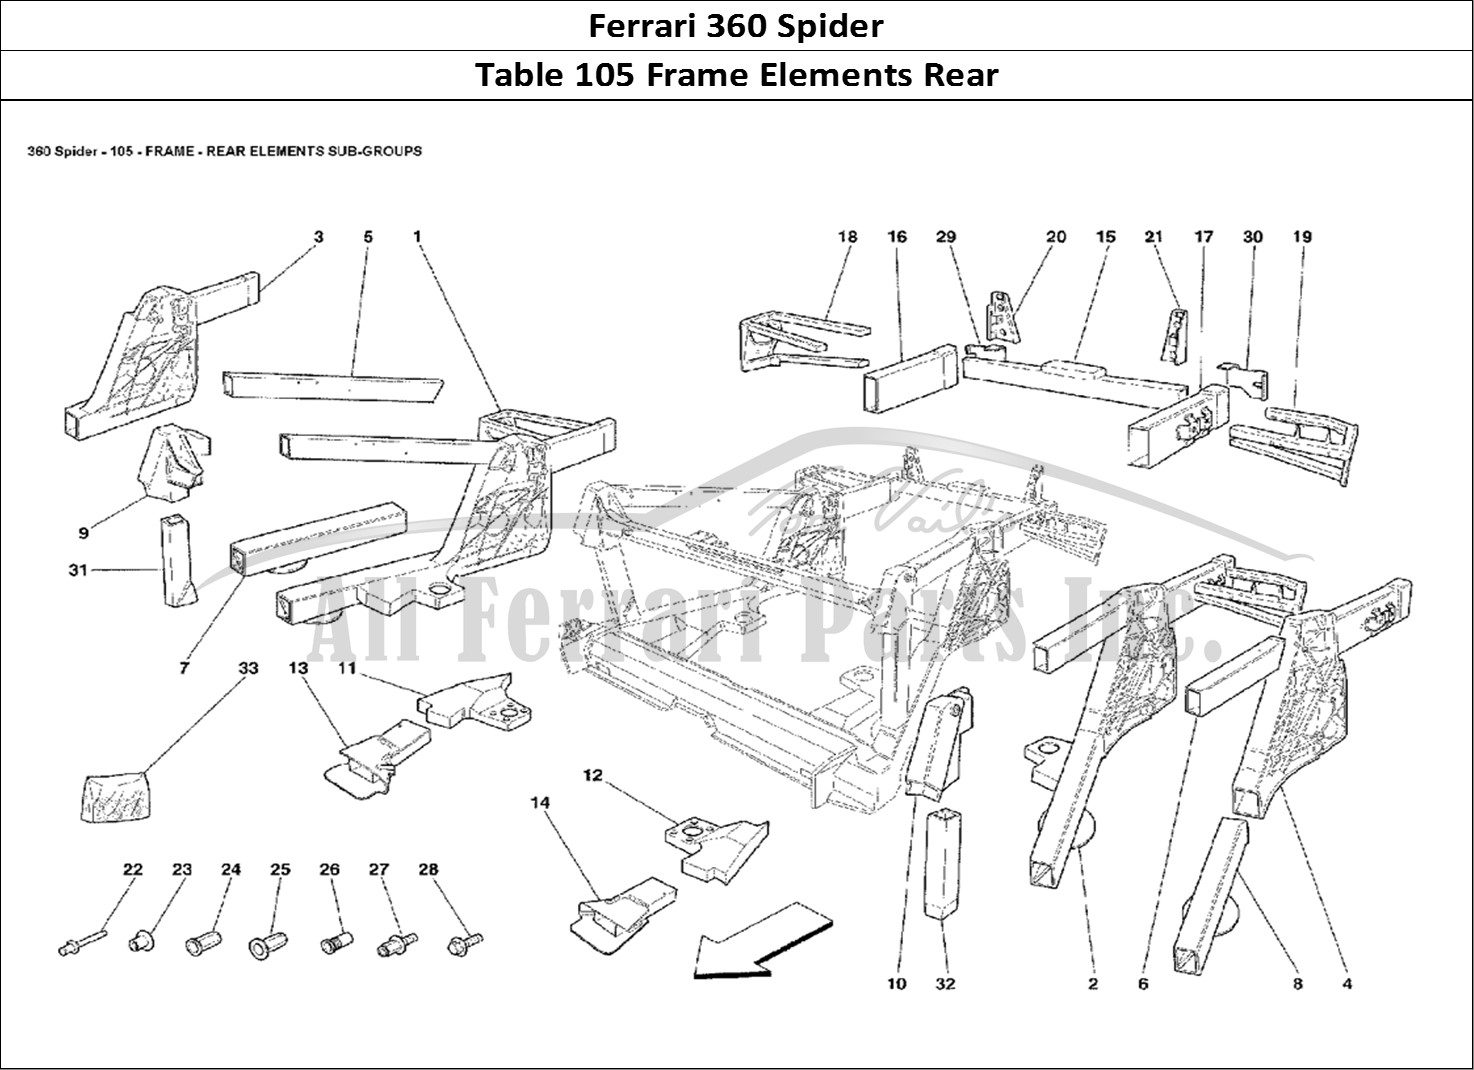 Ferrari Parts Ferrari 360 Spider Page 105 Frame - Rear Elements Sub